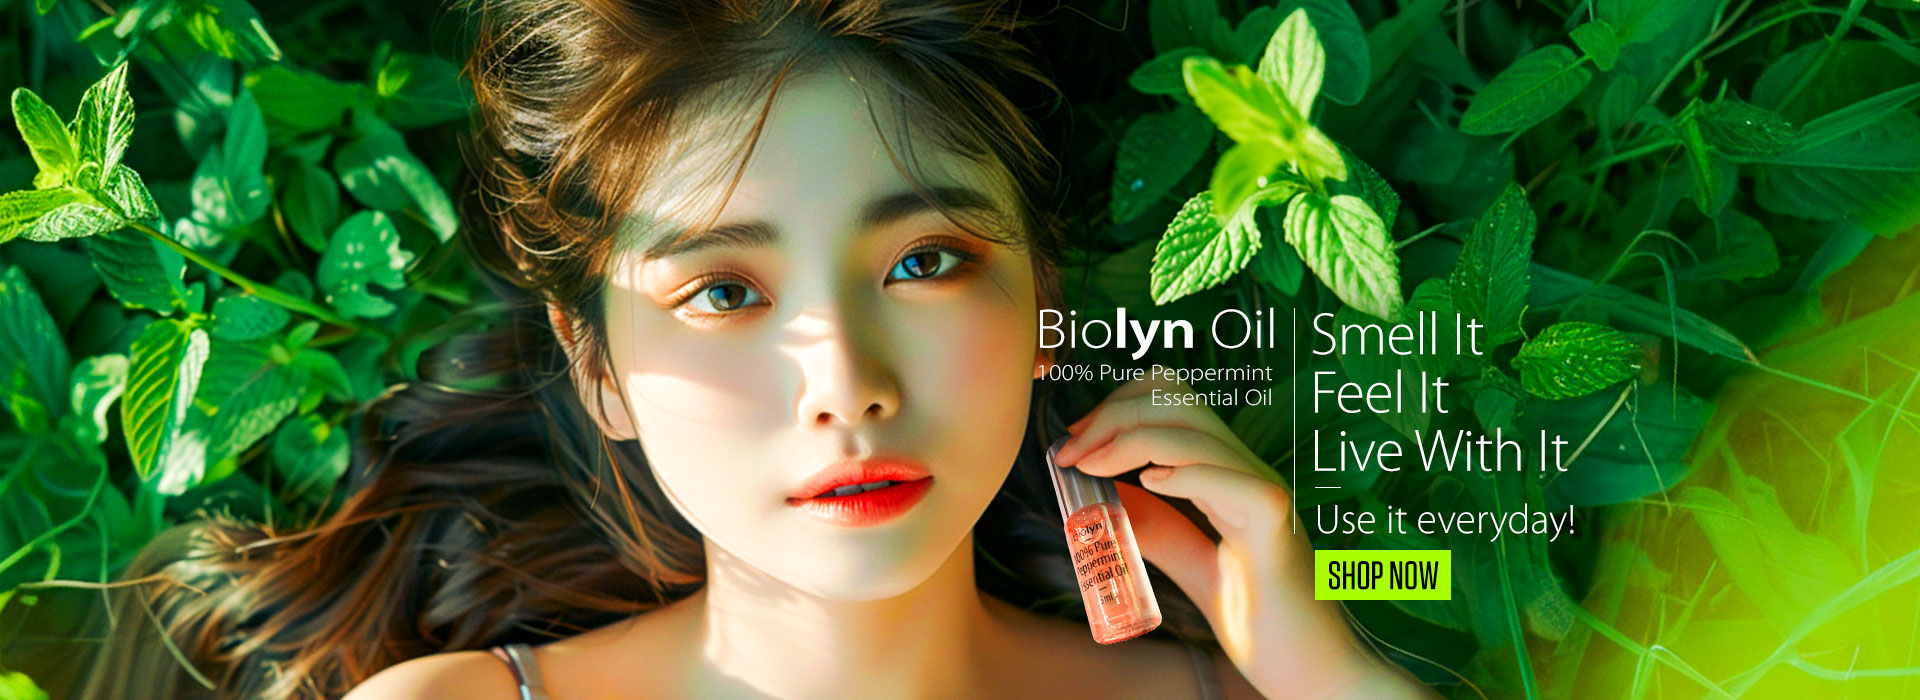 biolyn-oil-banner_1